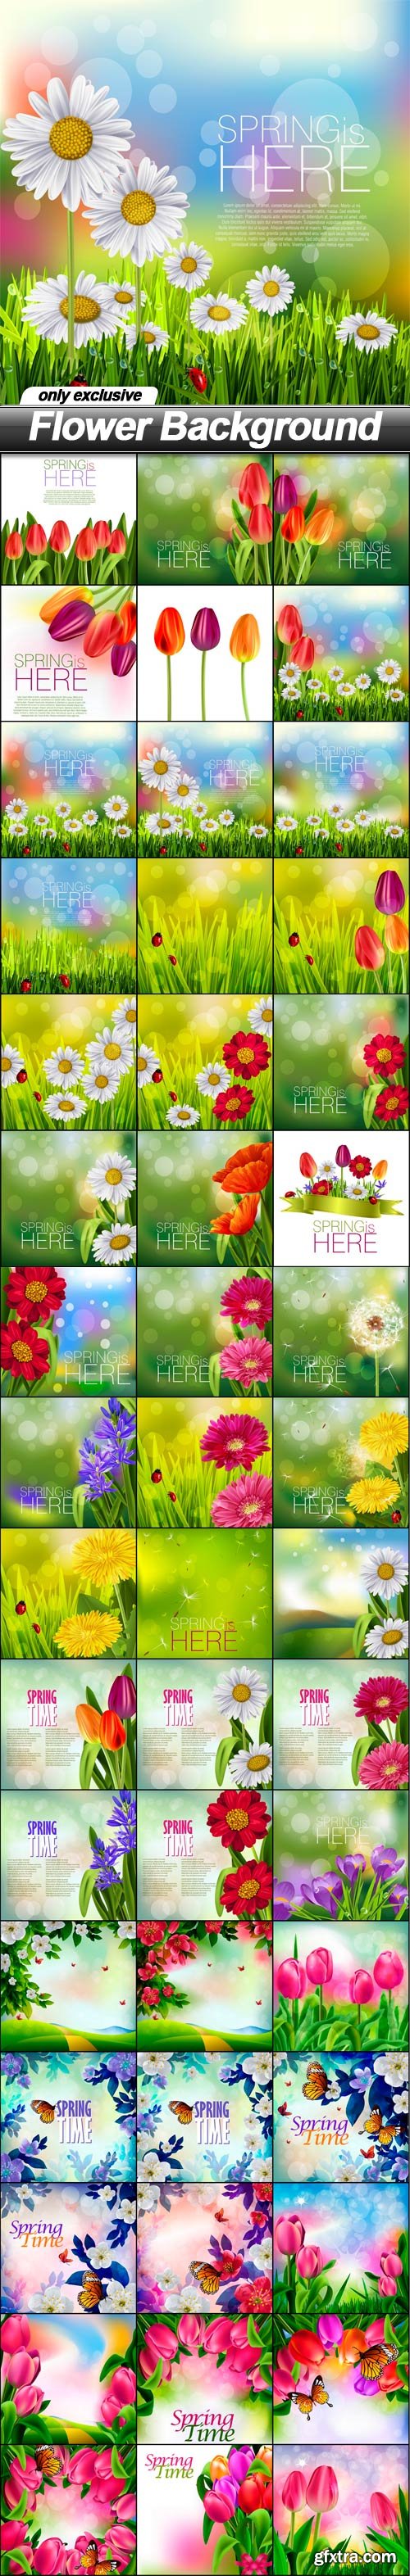 Flower Background - 48 EPS